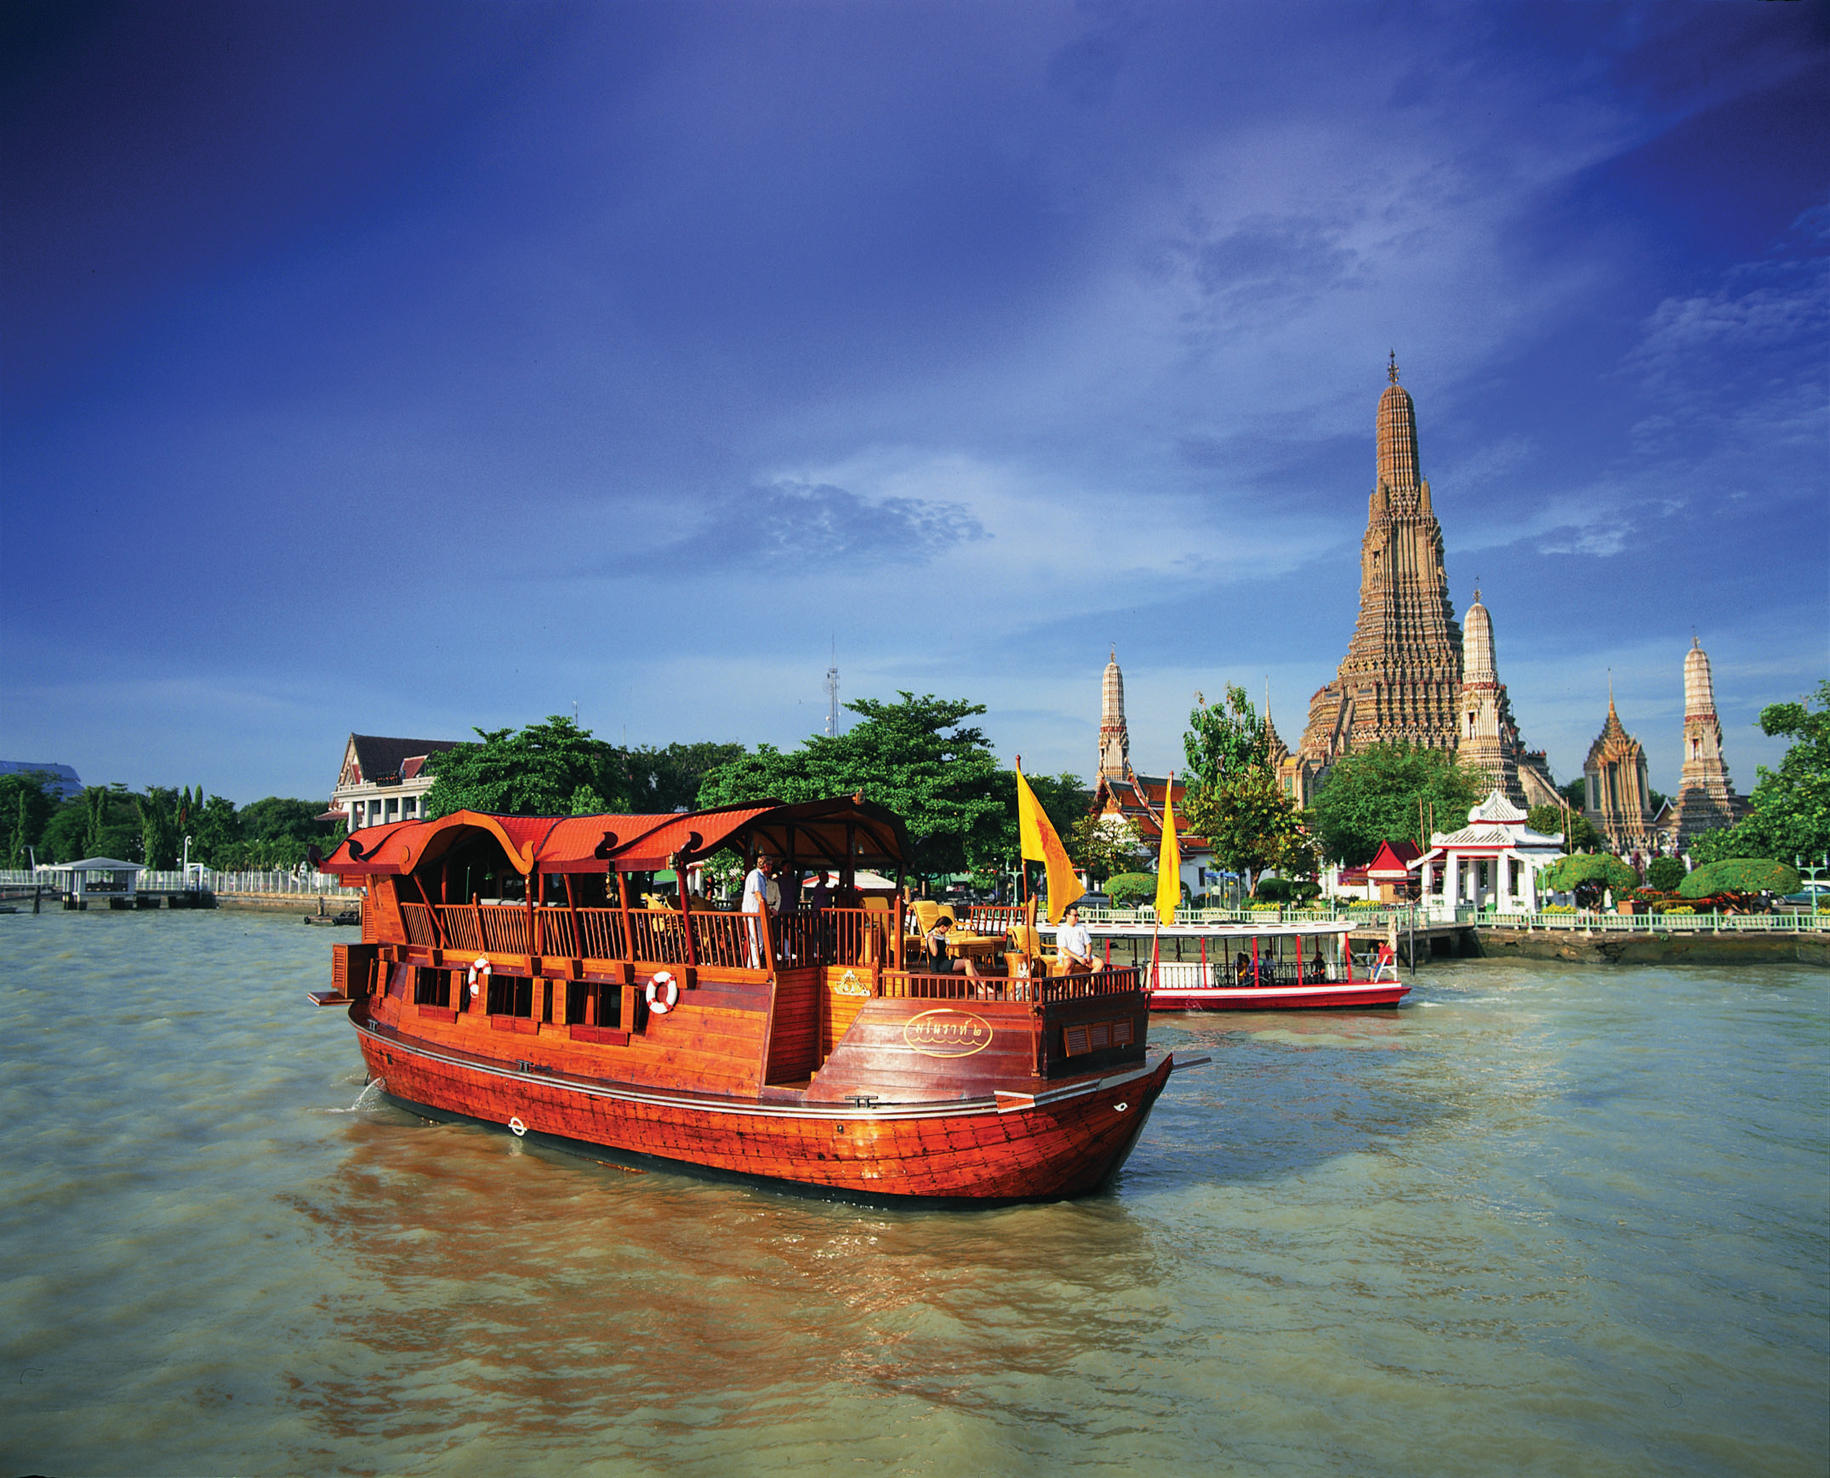 An Anantara cruise passes by Wat Arun.